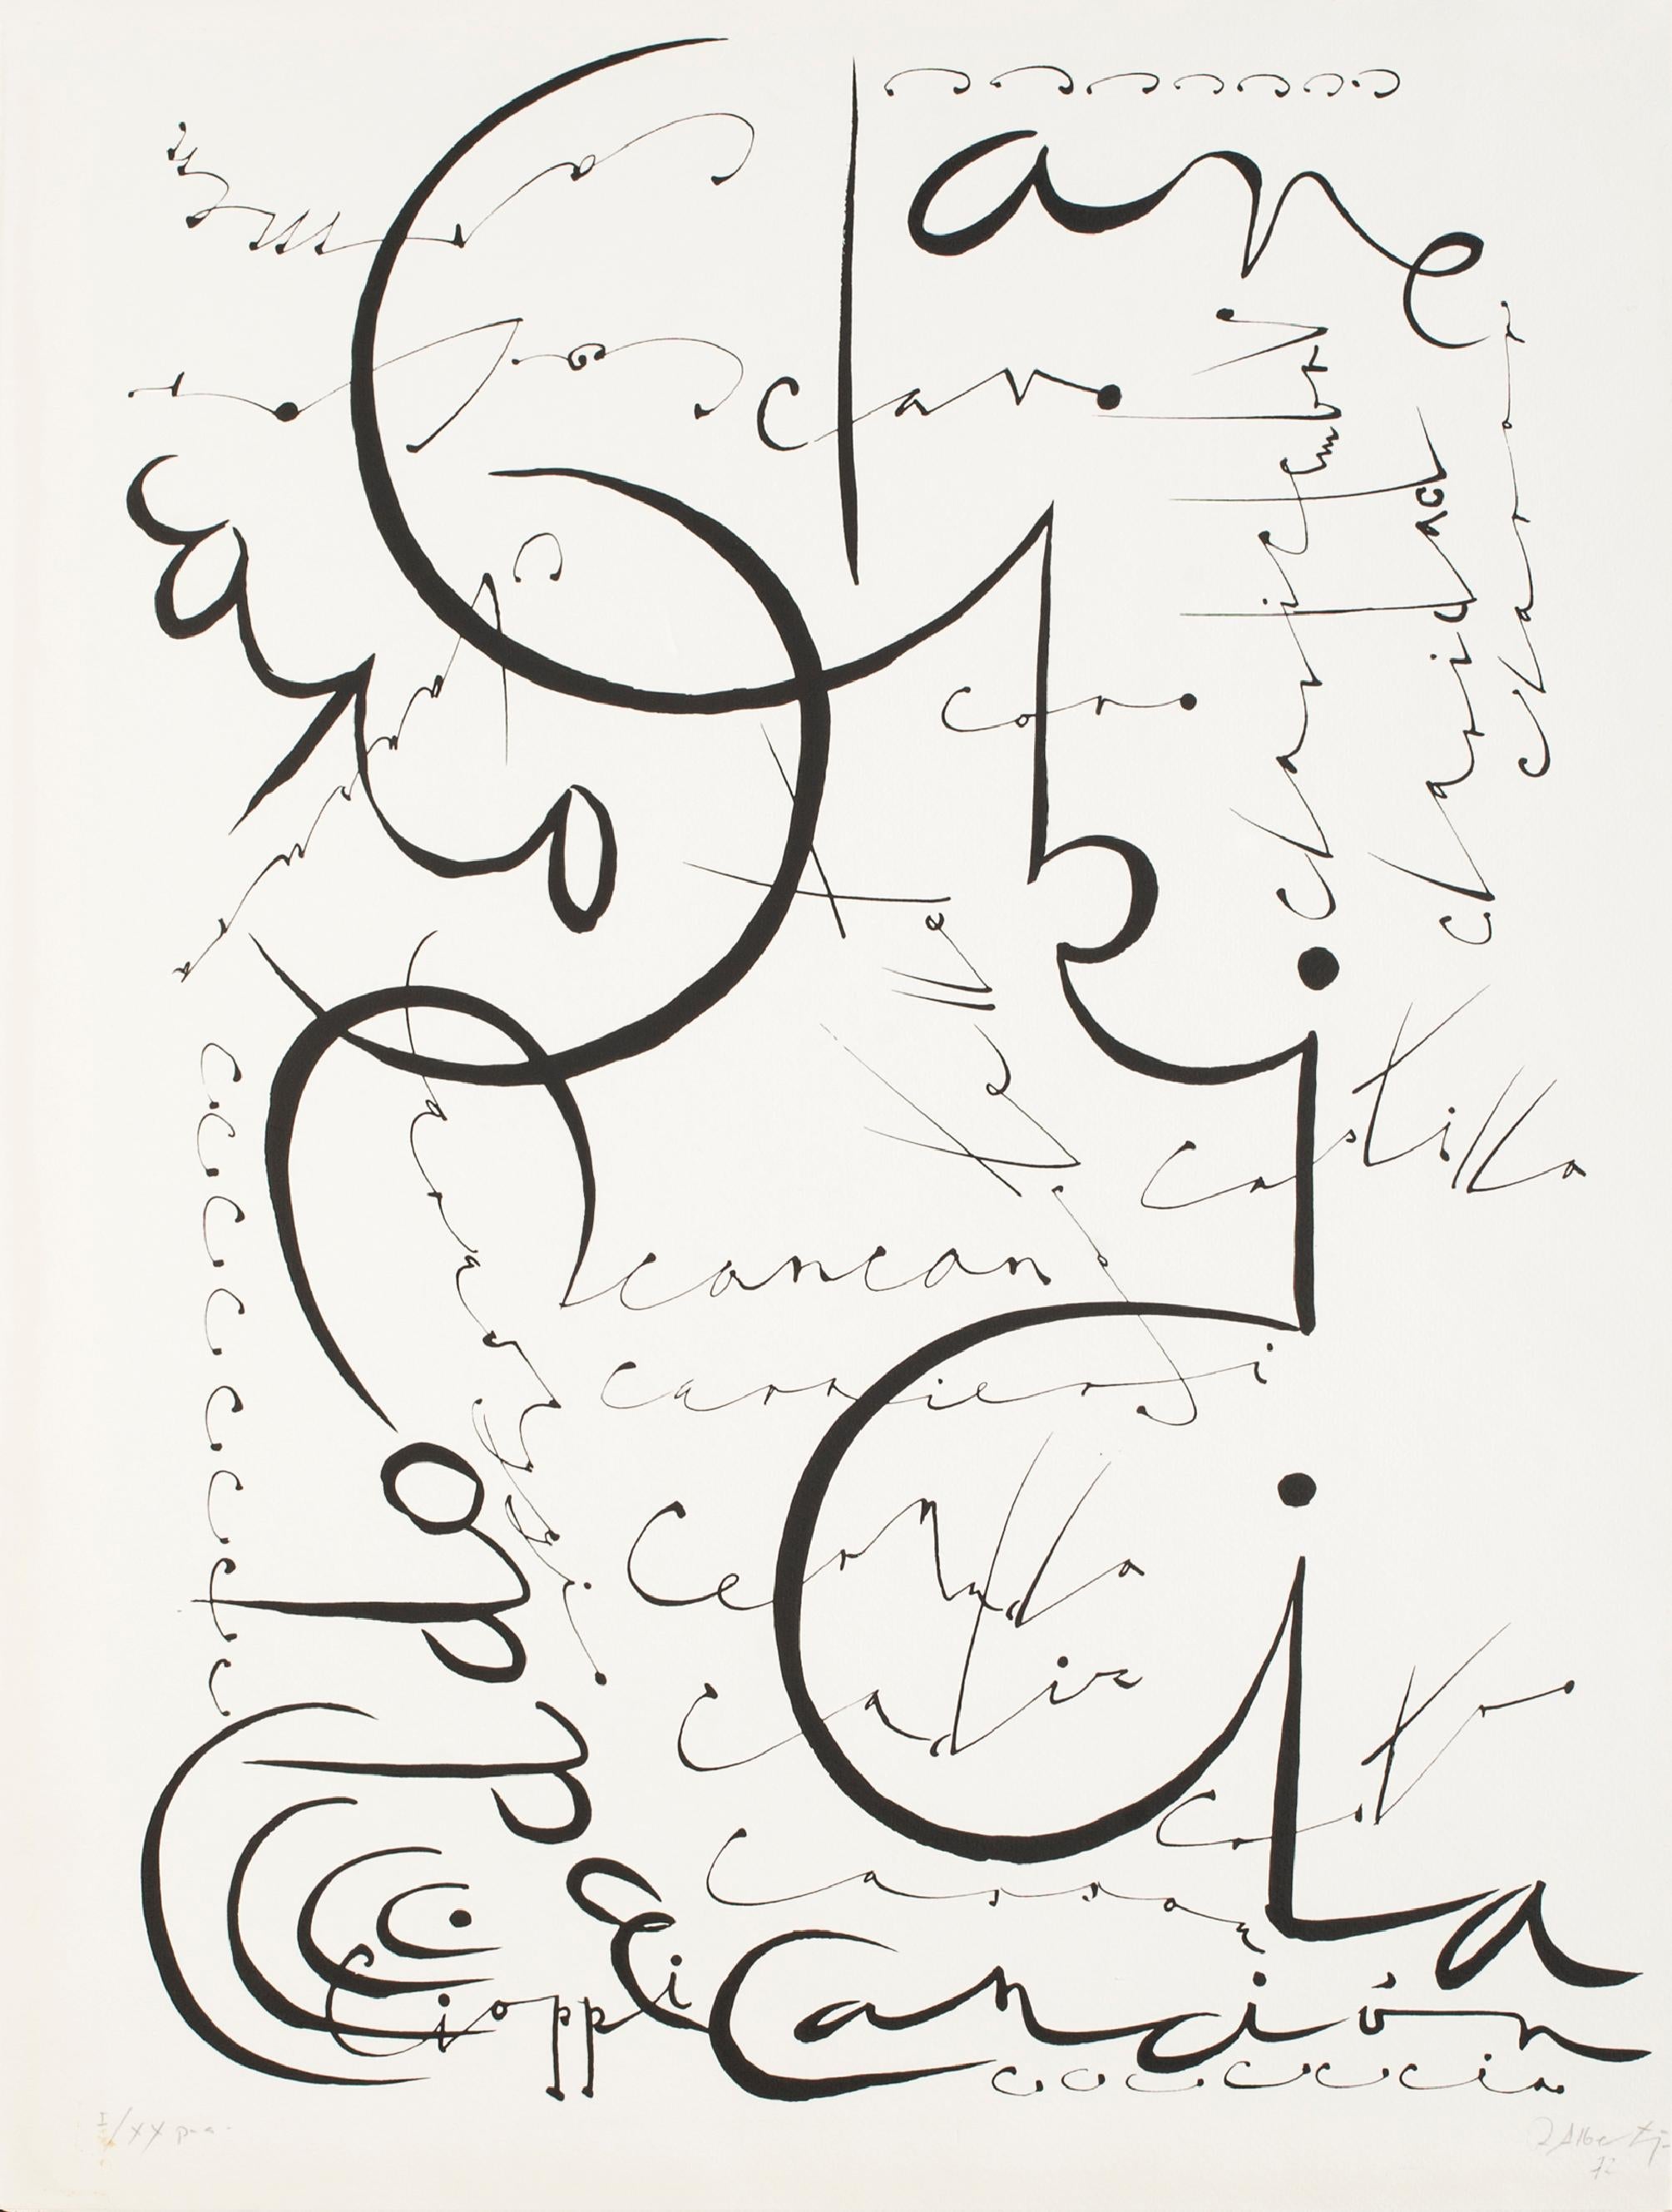 Rafael Alberti Abstract Print - Letter C - Original Lithograph by Raphael Alberti - 1972